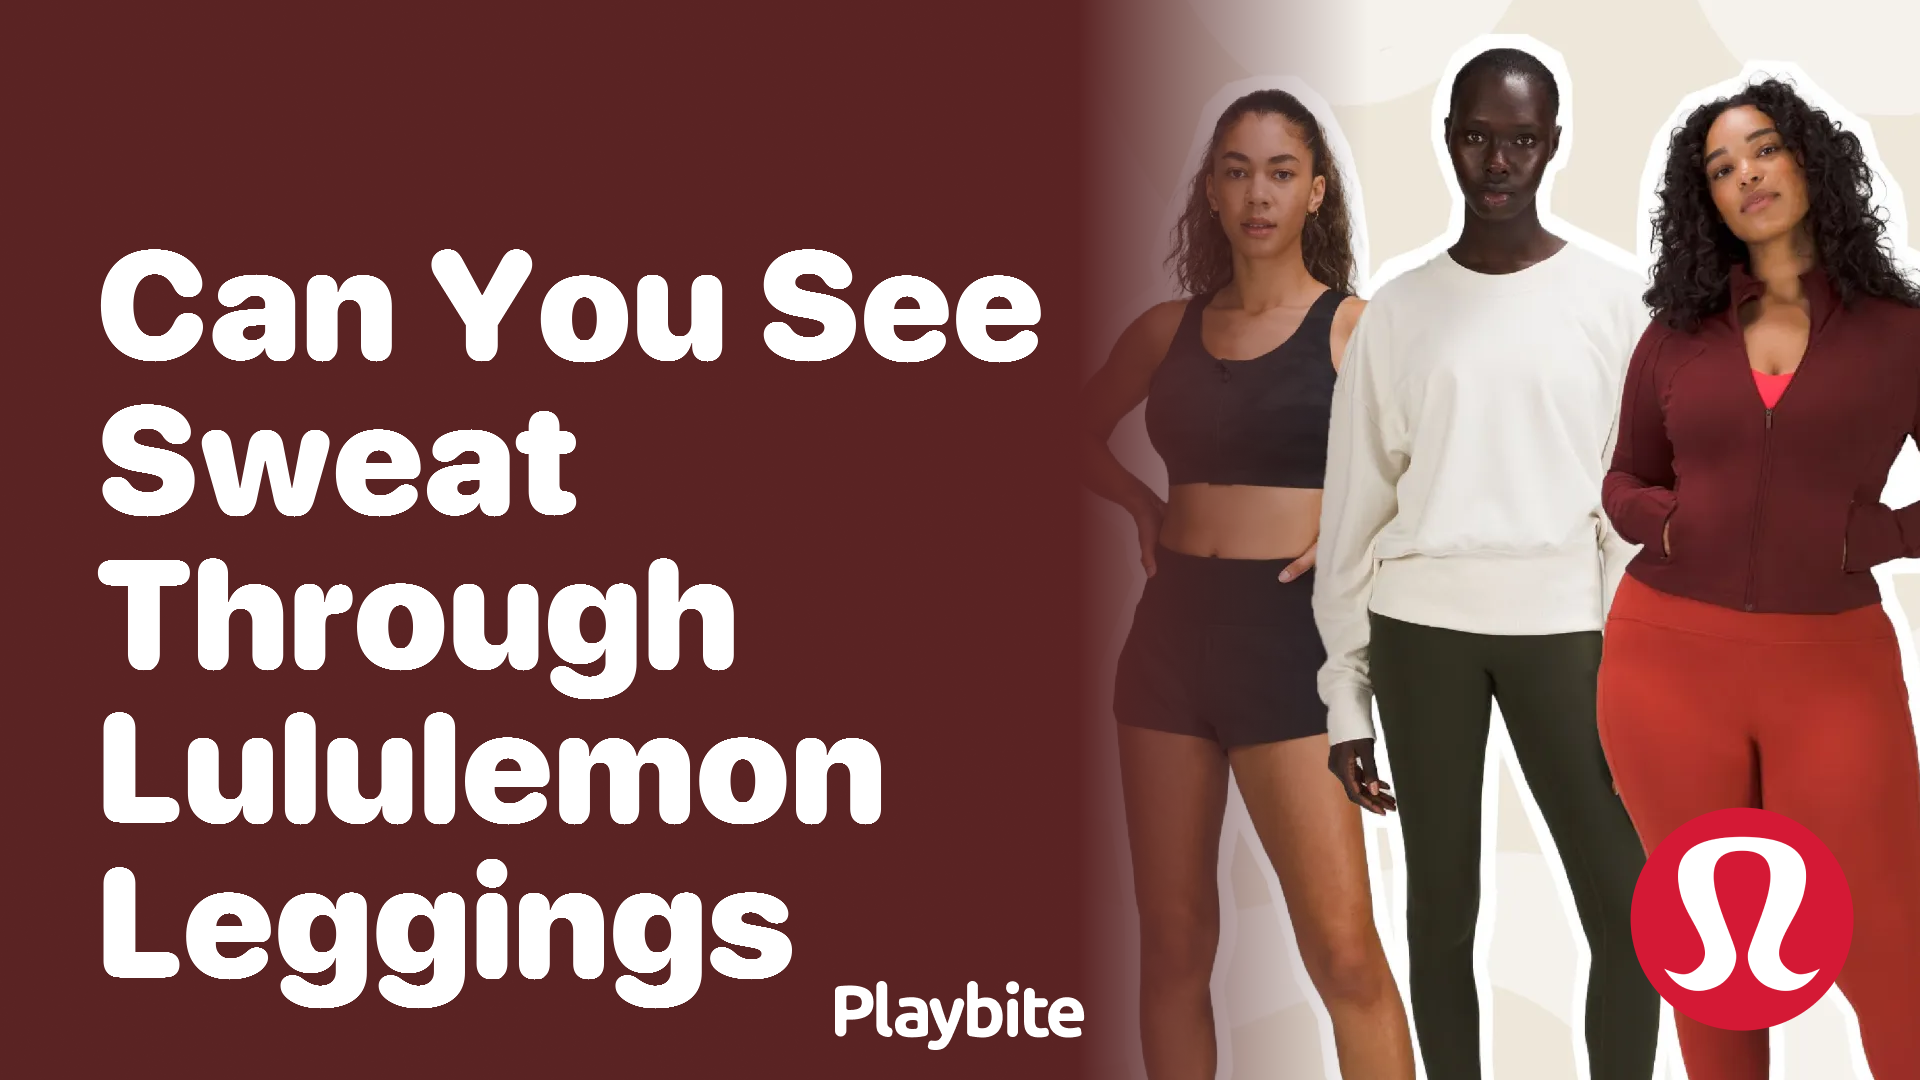 Can You See Sweat Through Lululemon Leggings? - Playbite